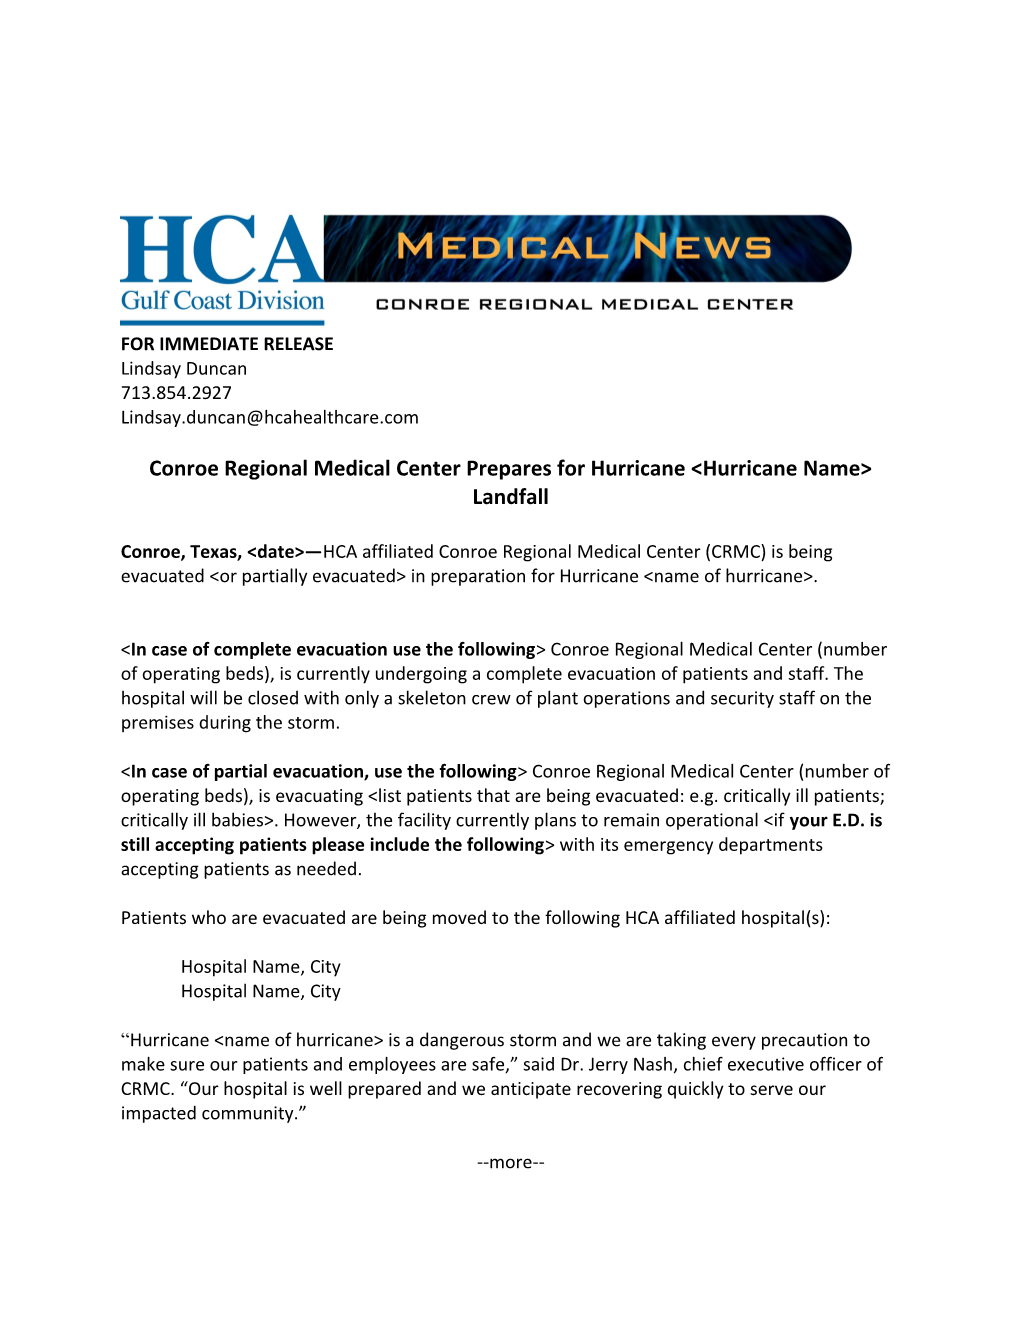 Conroe Regional Medical Center Prepares for Hurricane &lt;Hurricane Name&gt; Landfall